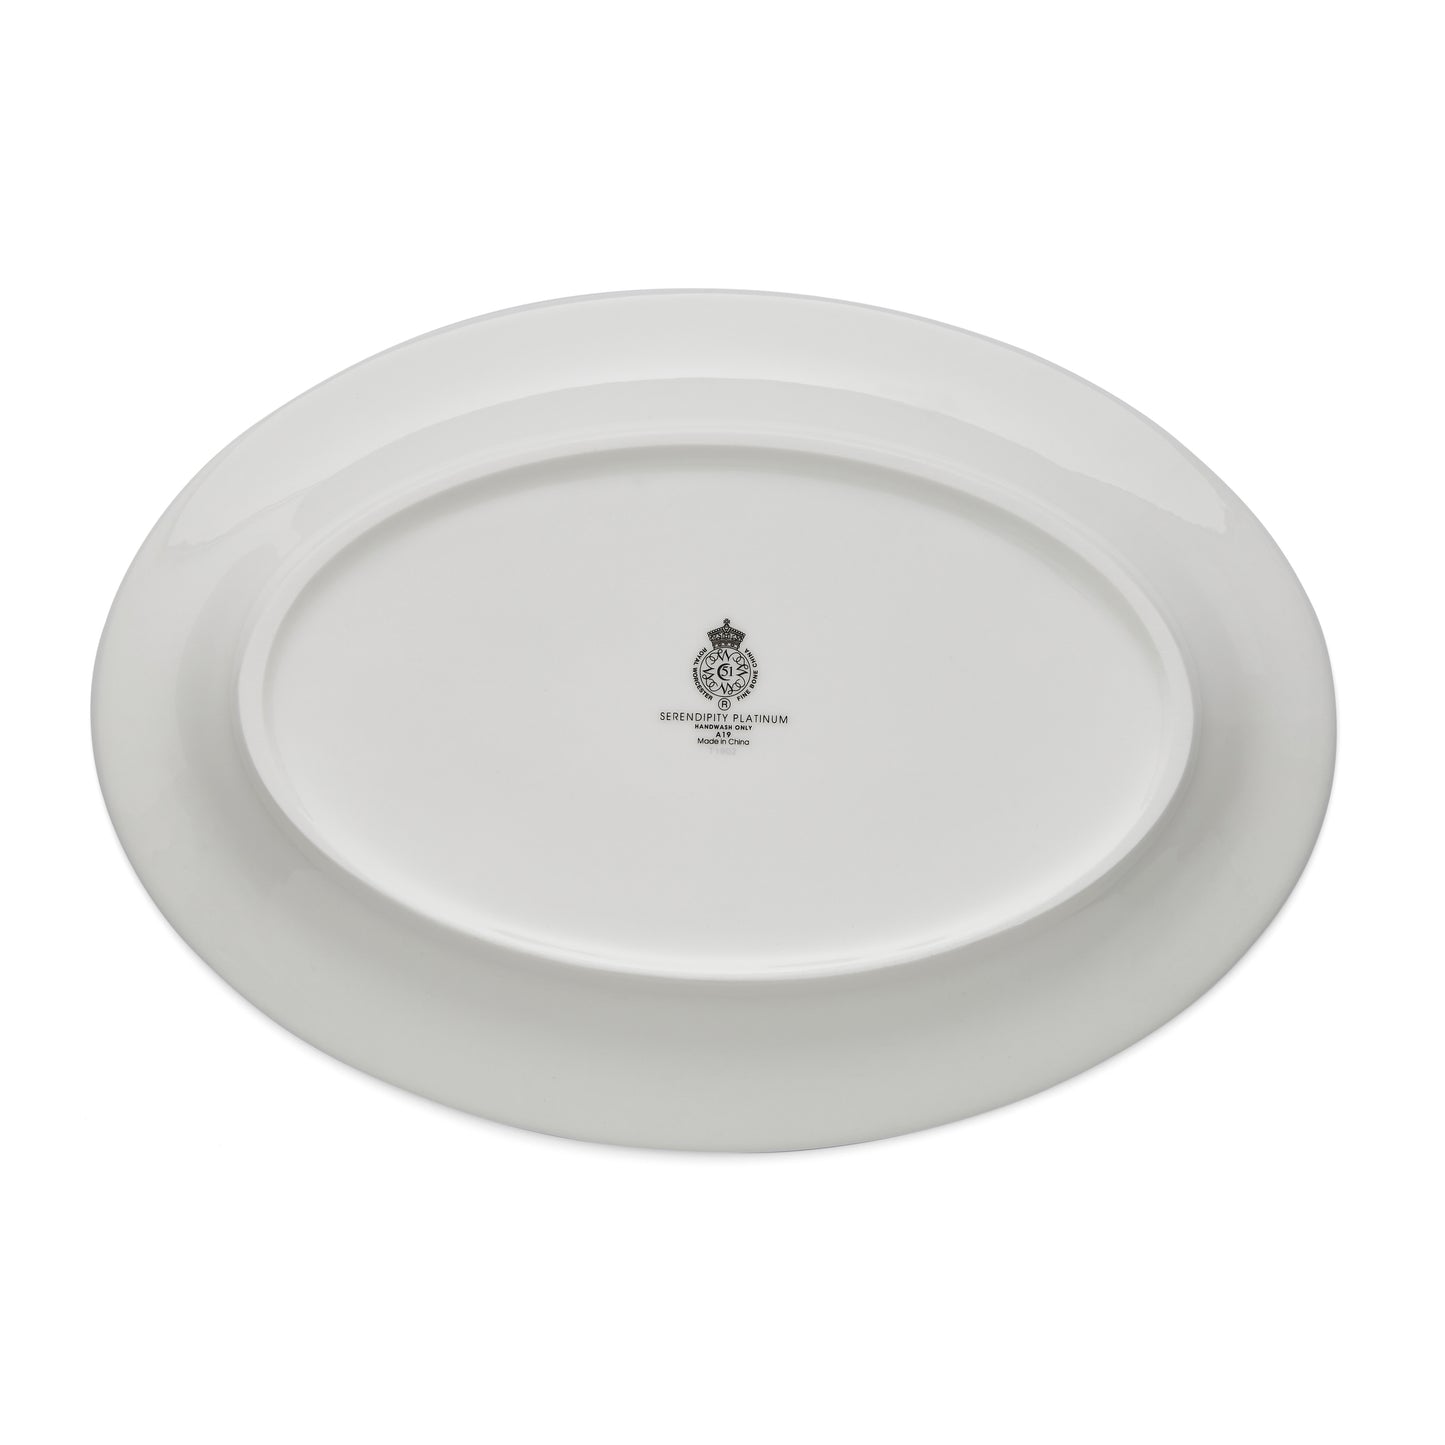 Royal Worcester Serendipity Platinum Oval Platter 30cm